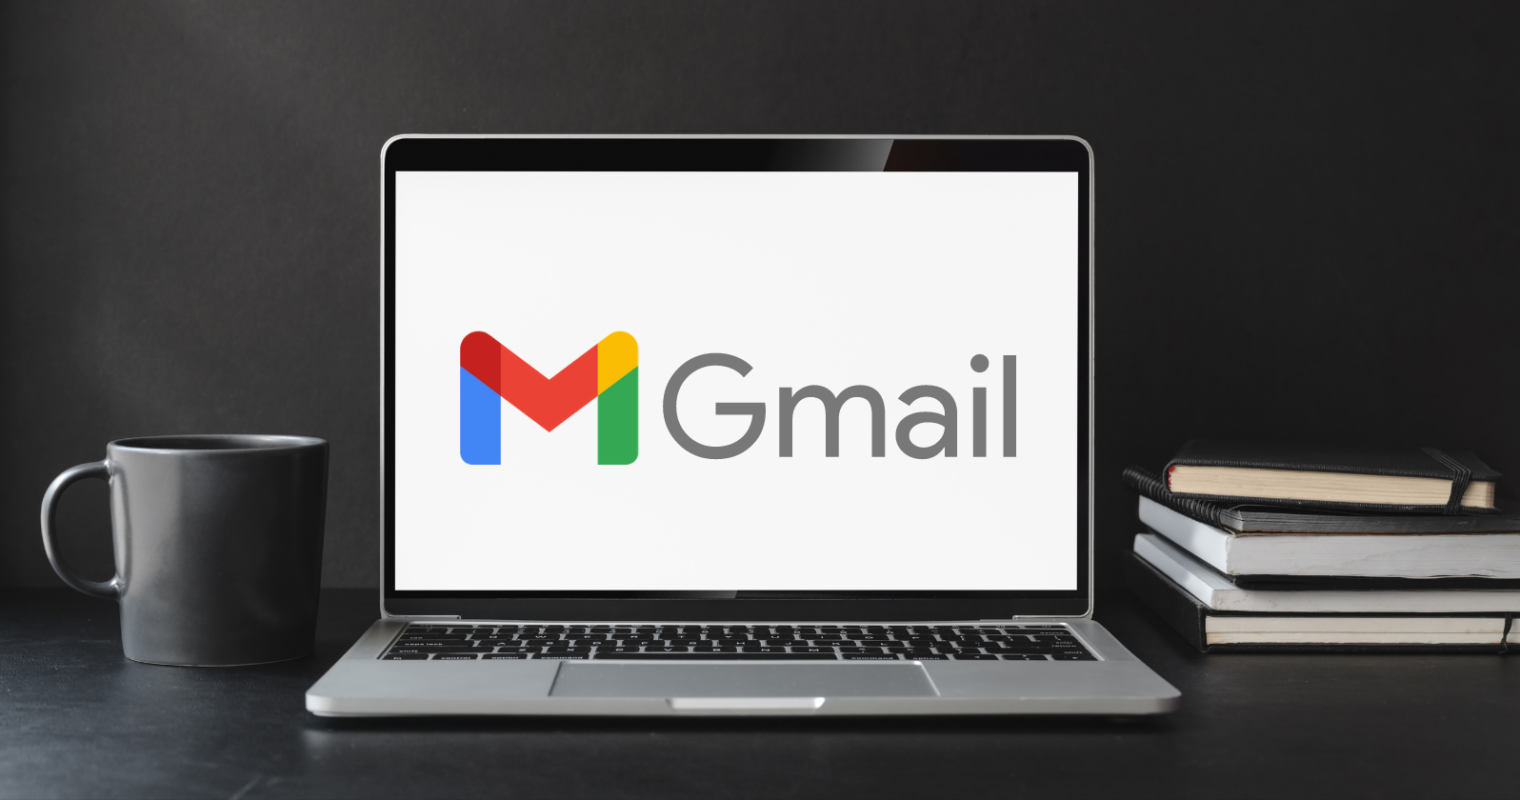 Gmail ส่งฟีเจอร์ใหม่เพื่อช่วยติดตามคำสั่งสินค้าตอนรับเทศกาลคริสต์มาส